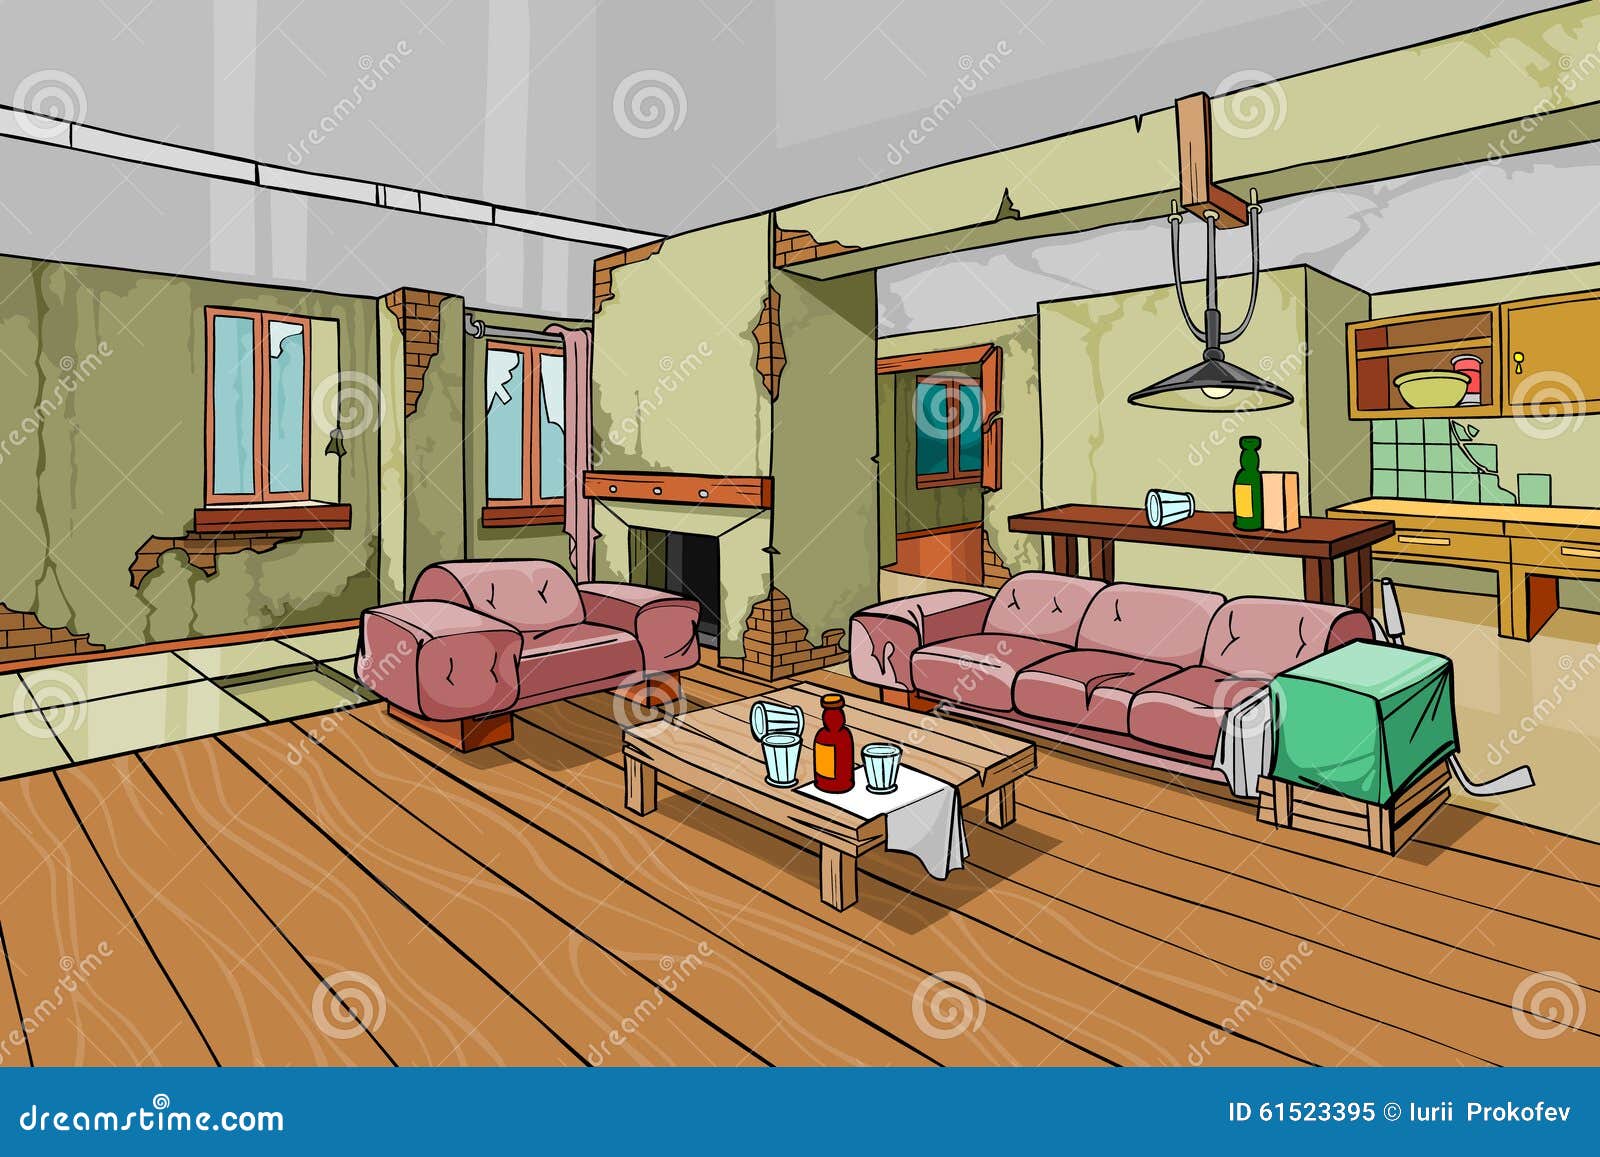 Cartoon Old Shabby Apartment Interior Stock Vector ...